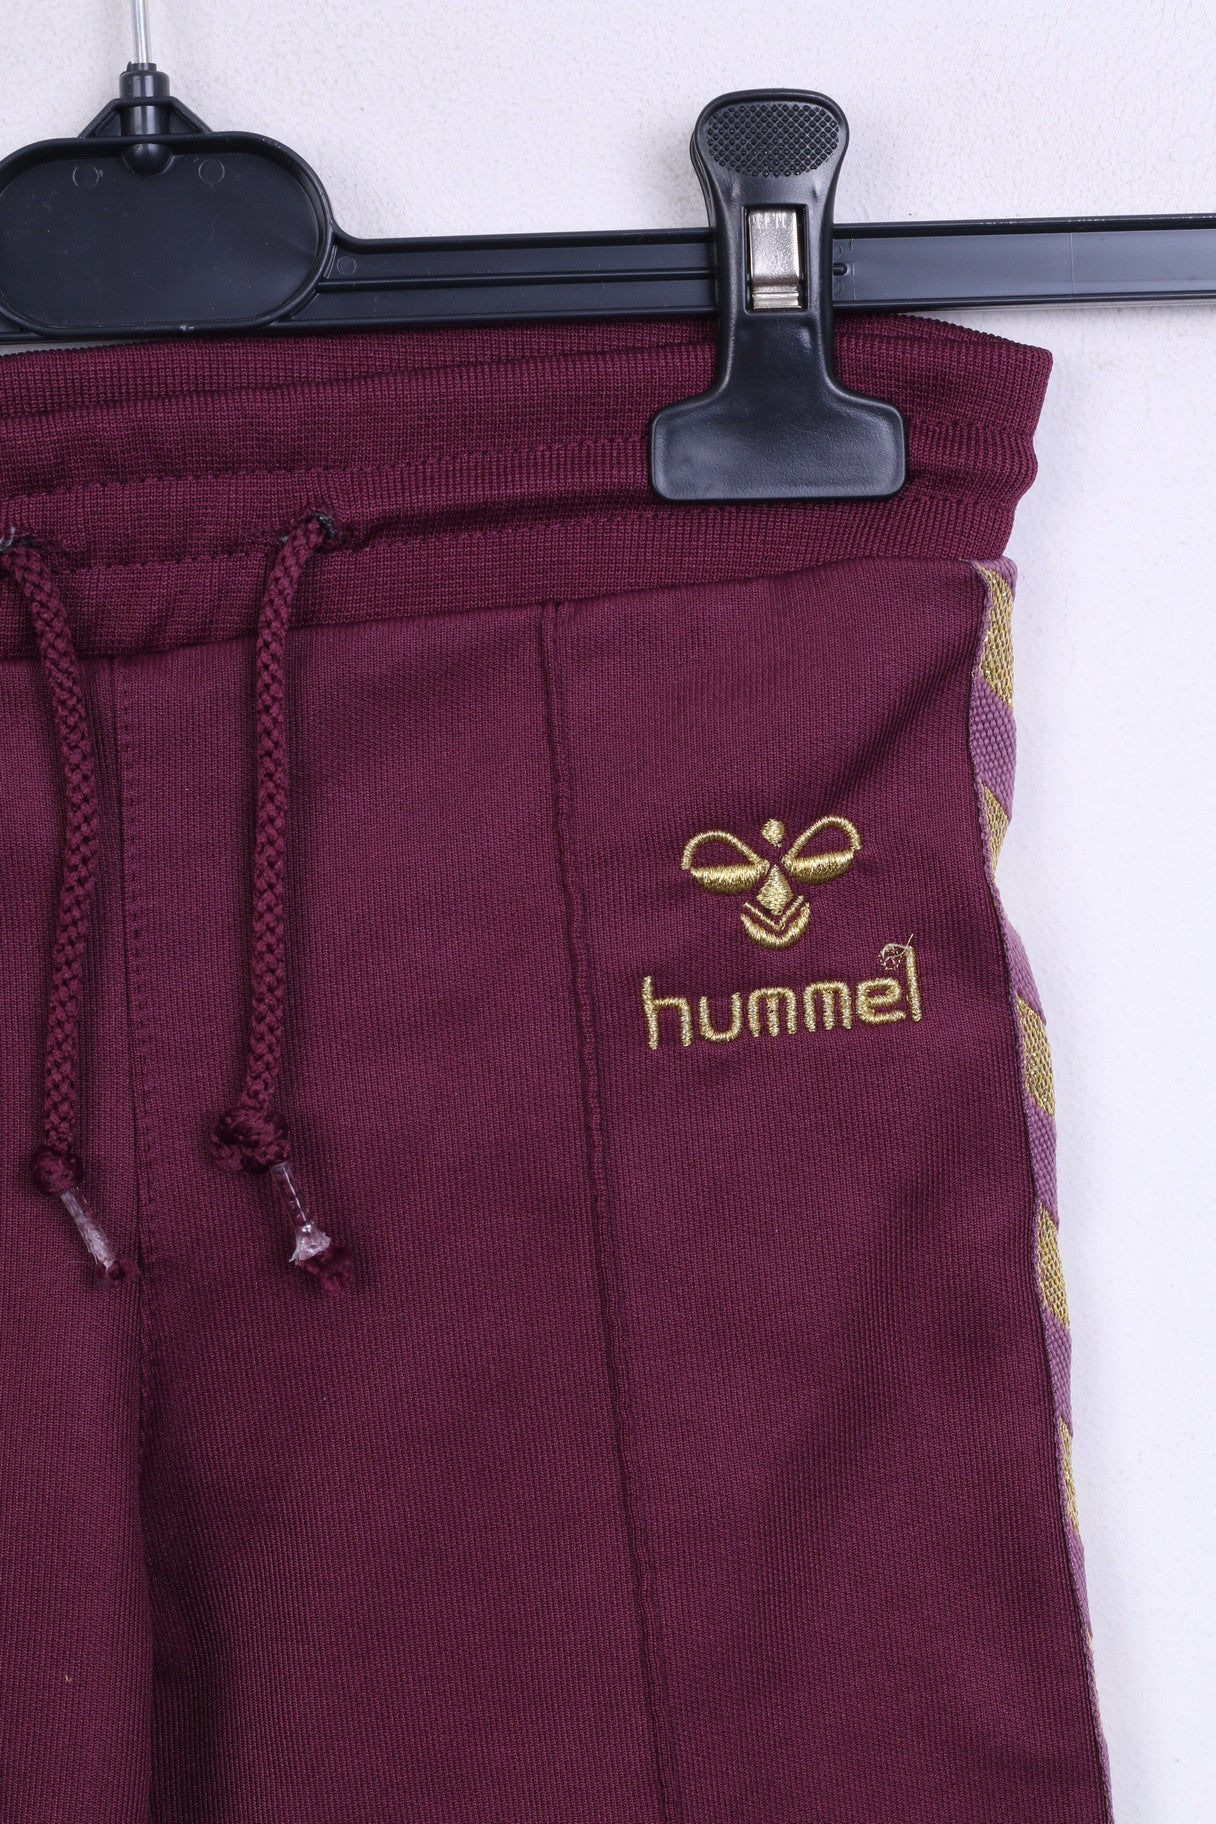 Hummel Grils 110 Trousers Sweatpants Purple Sport